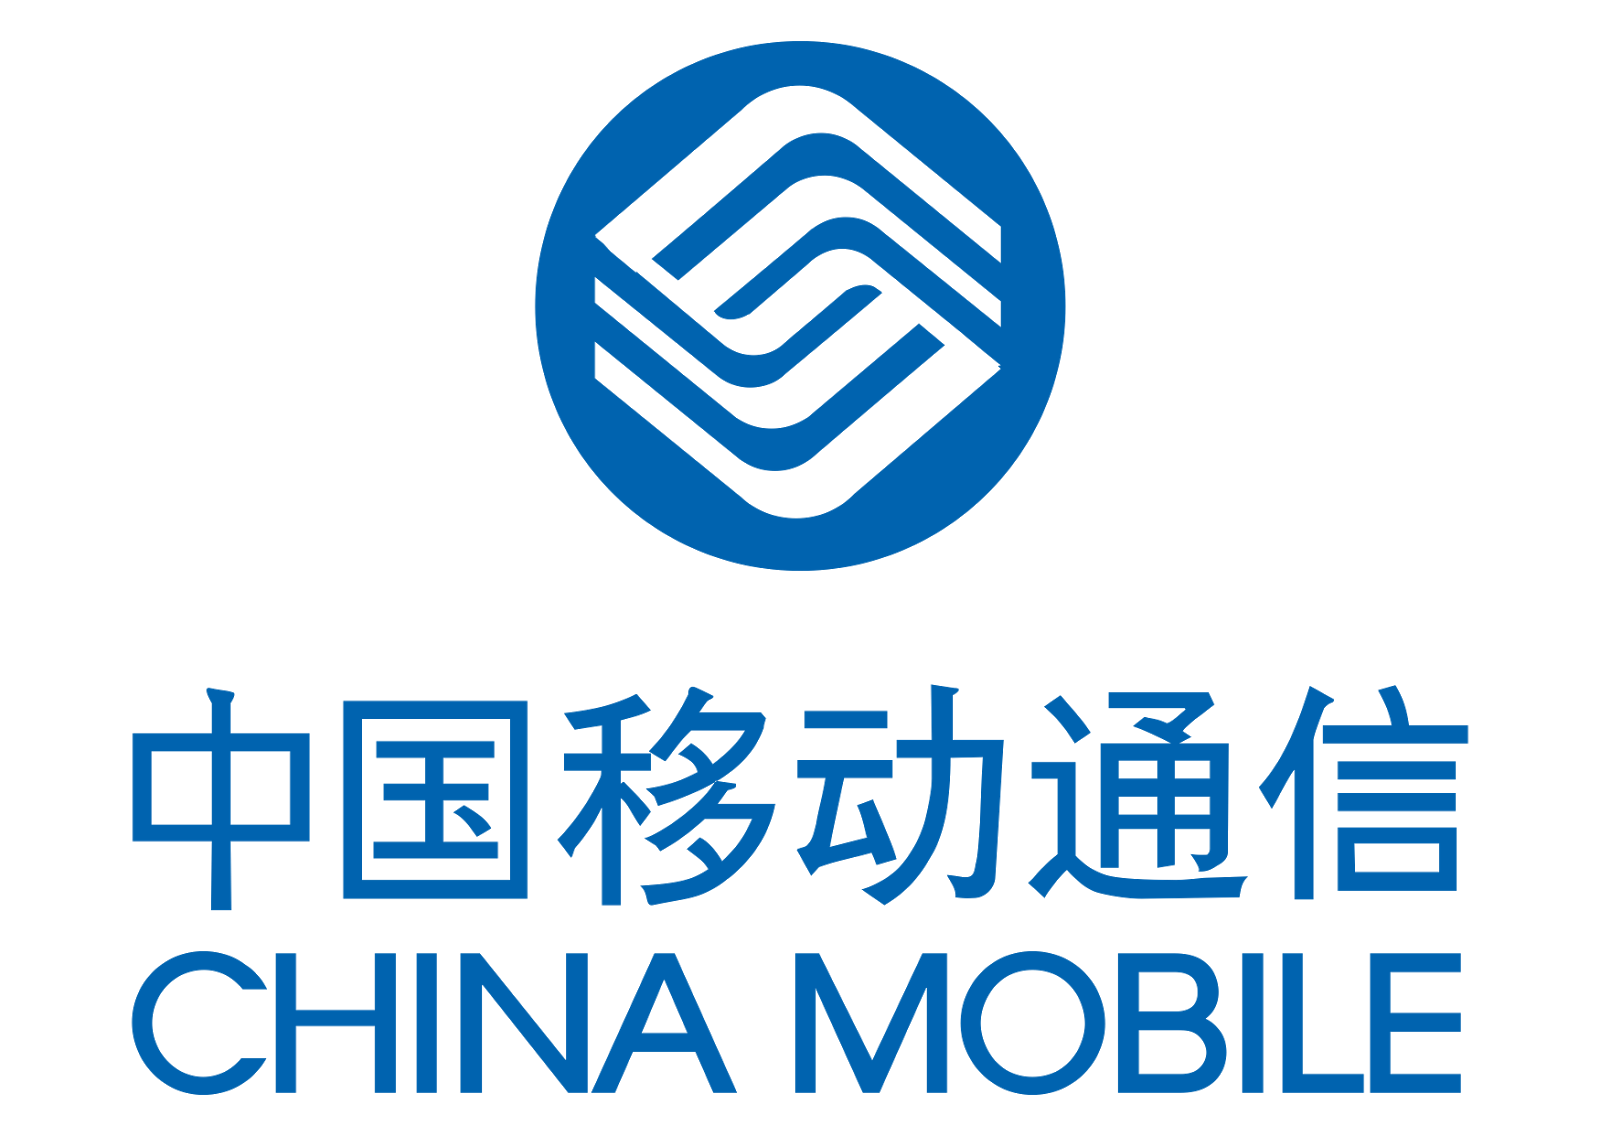 China Mobile Logo Transparent Images